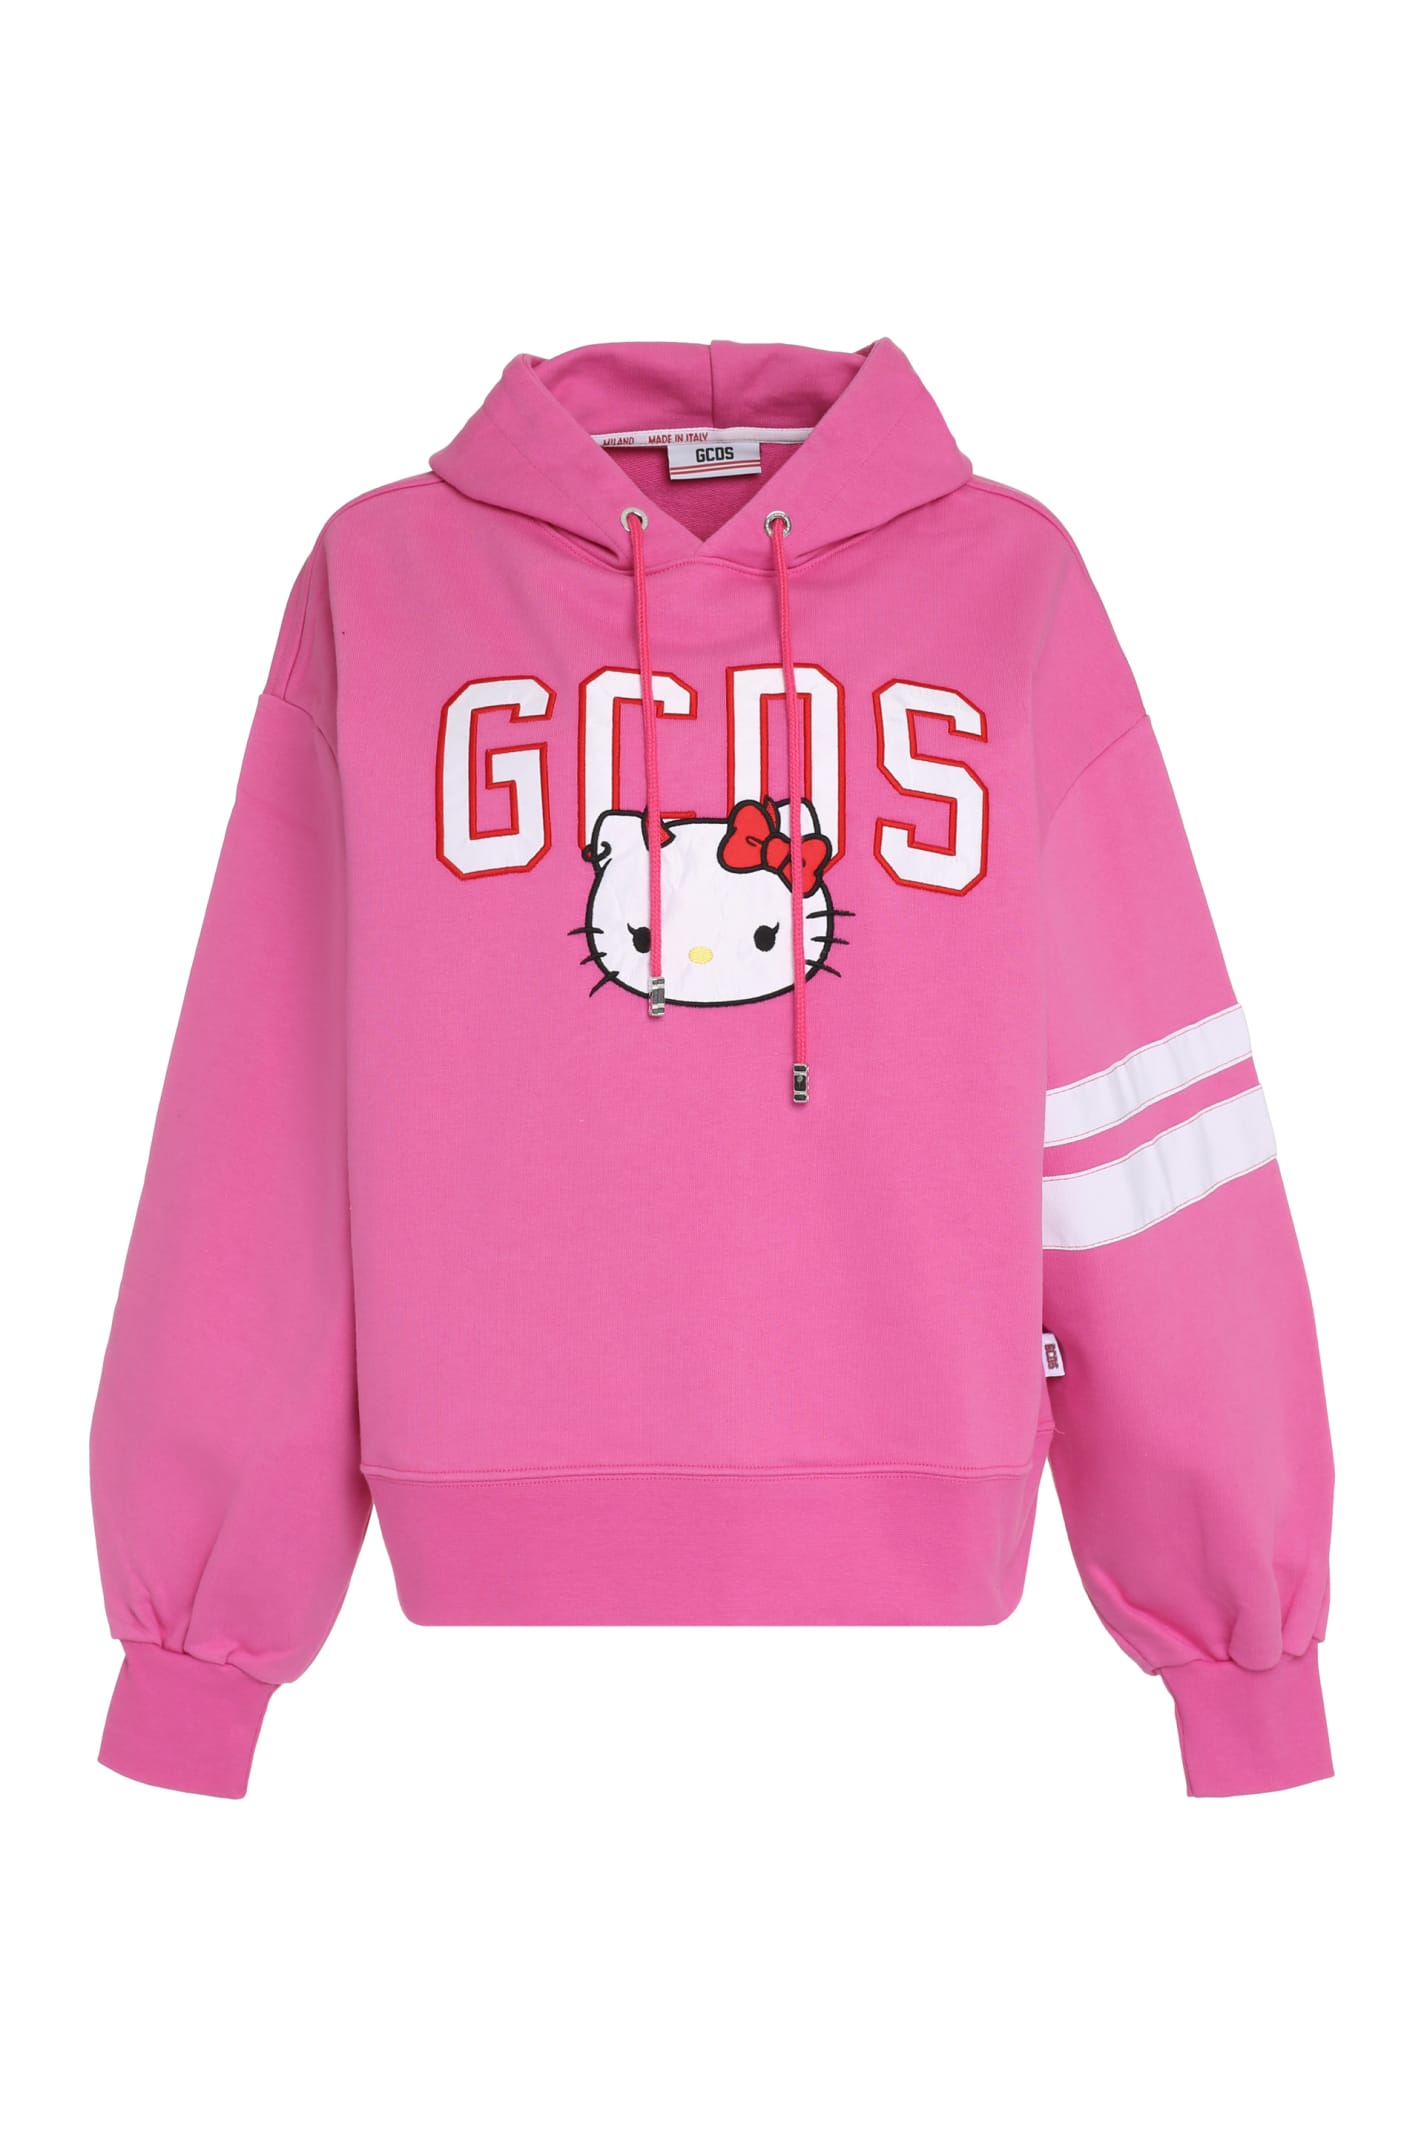 Gcds X Hello Kitty - Hooded Sweatshirt In Fuchsia